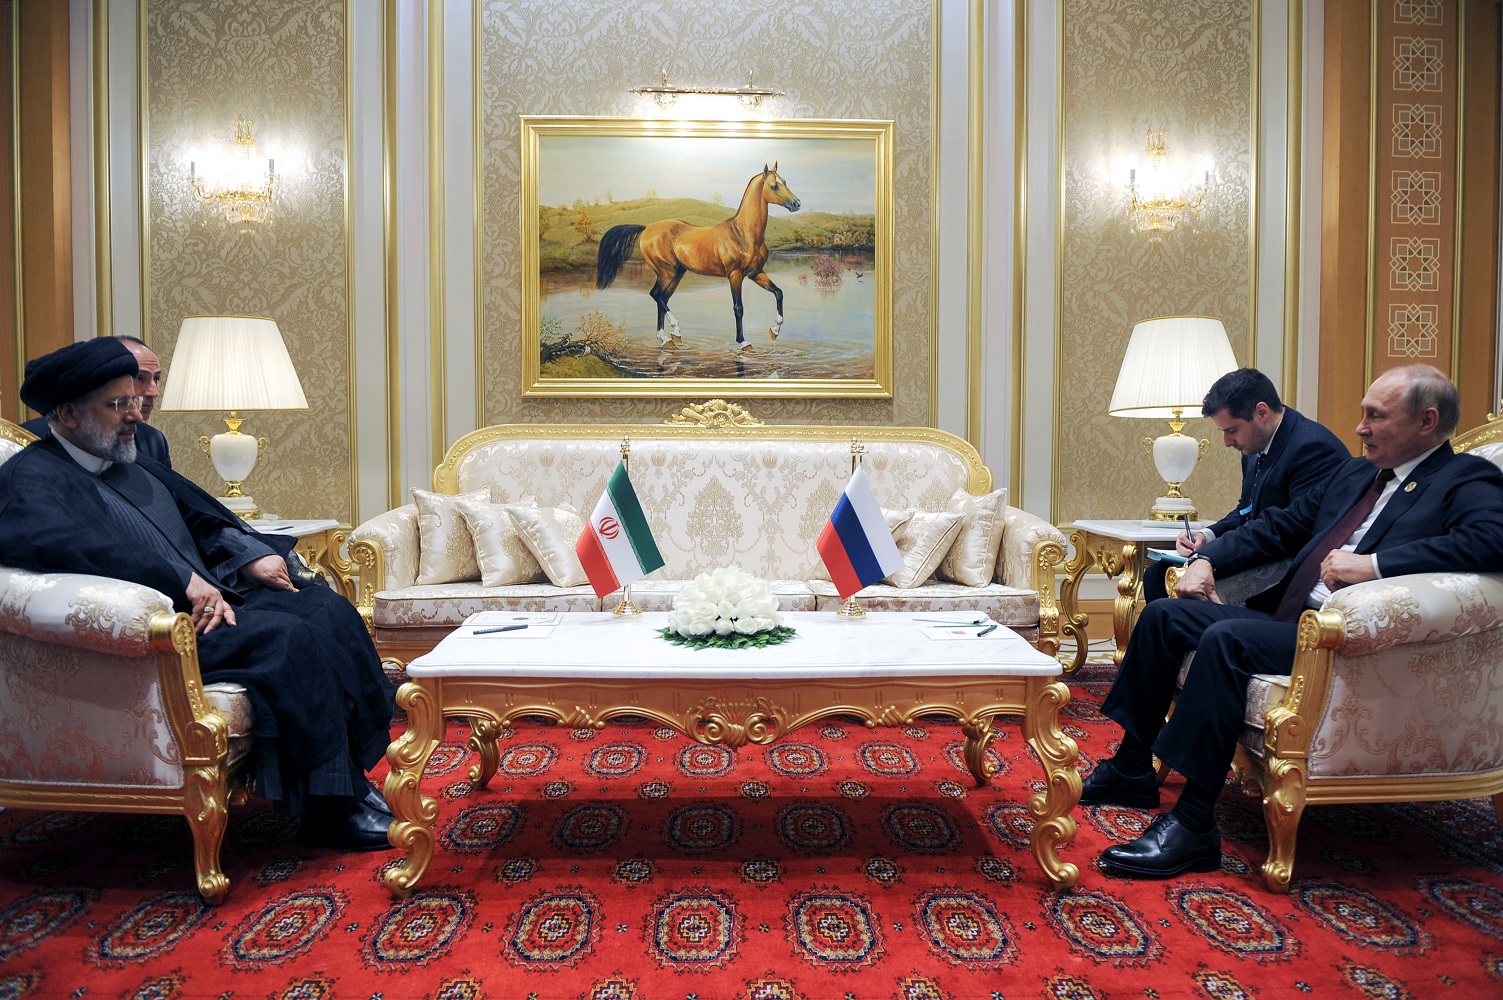 Russian President Vladimir Putin speaks with Iran's President Ebrahim Raisi during their meeting at the 6th Caspian Summit in Ashgabat, June 2022. Photo by MIKHAIL KLIMENTYEV/SPUTNIK/AFP via Getty Images